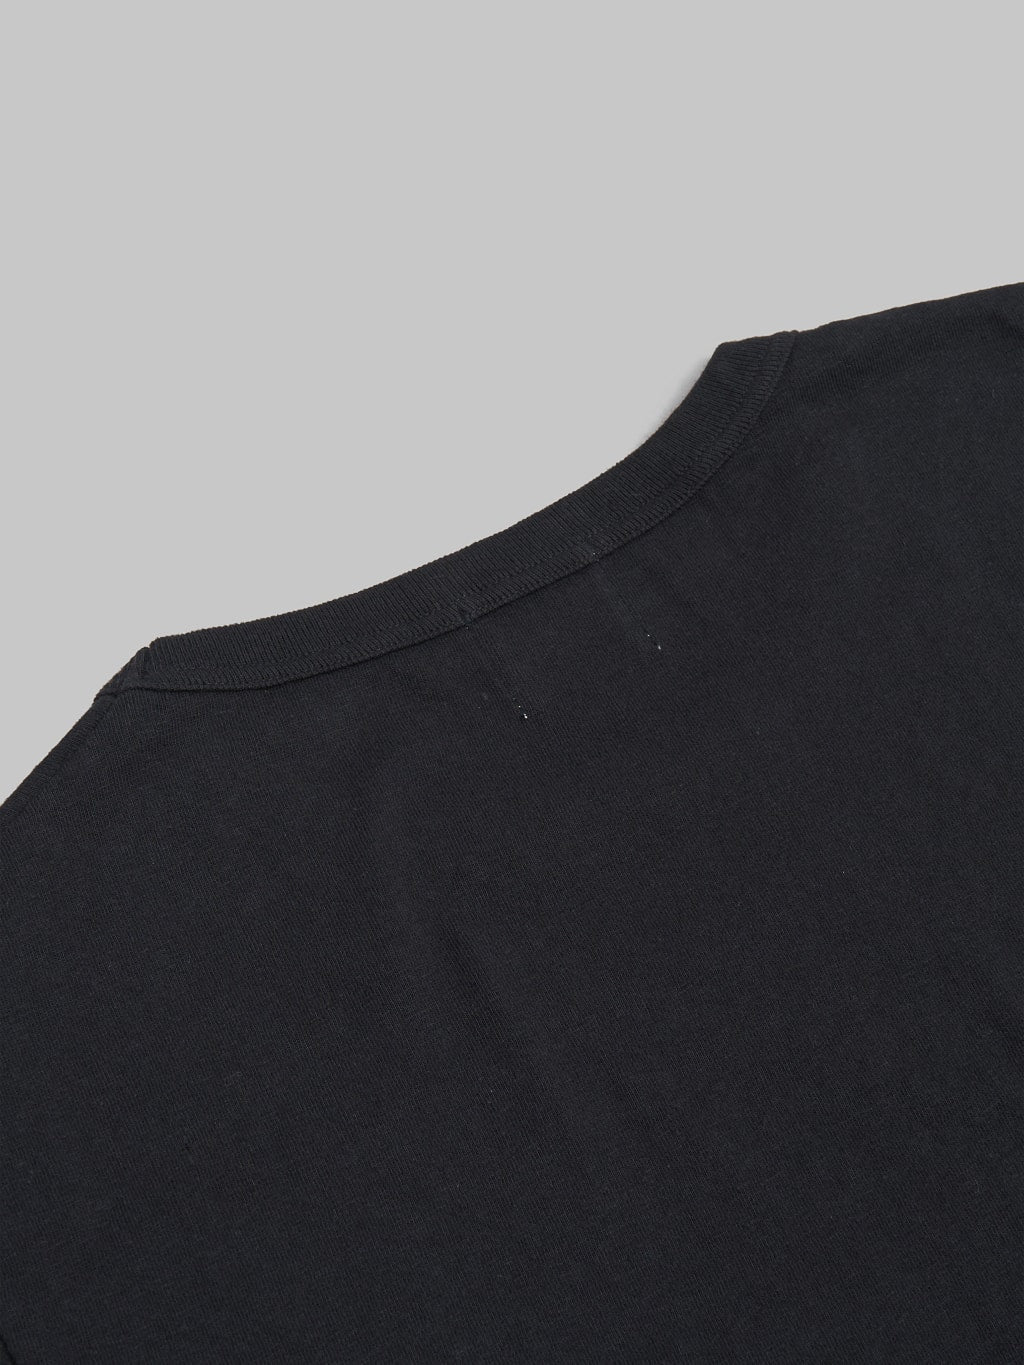 Samurai jeans crew neck tubular tshirt black collar stitching